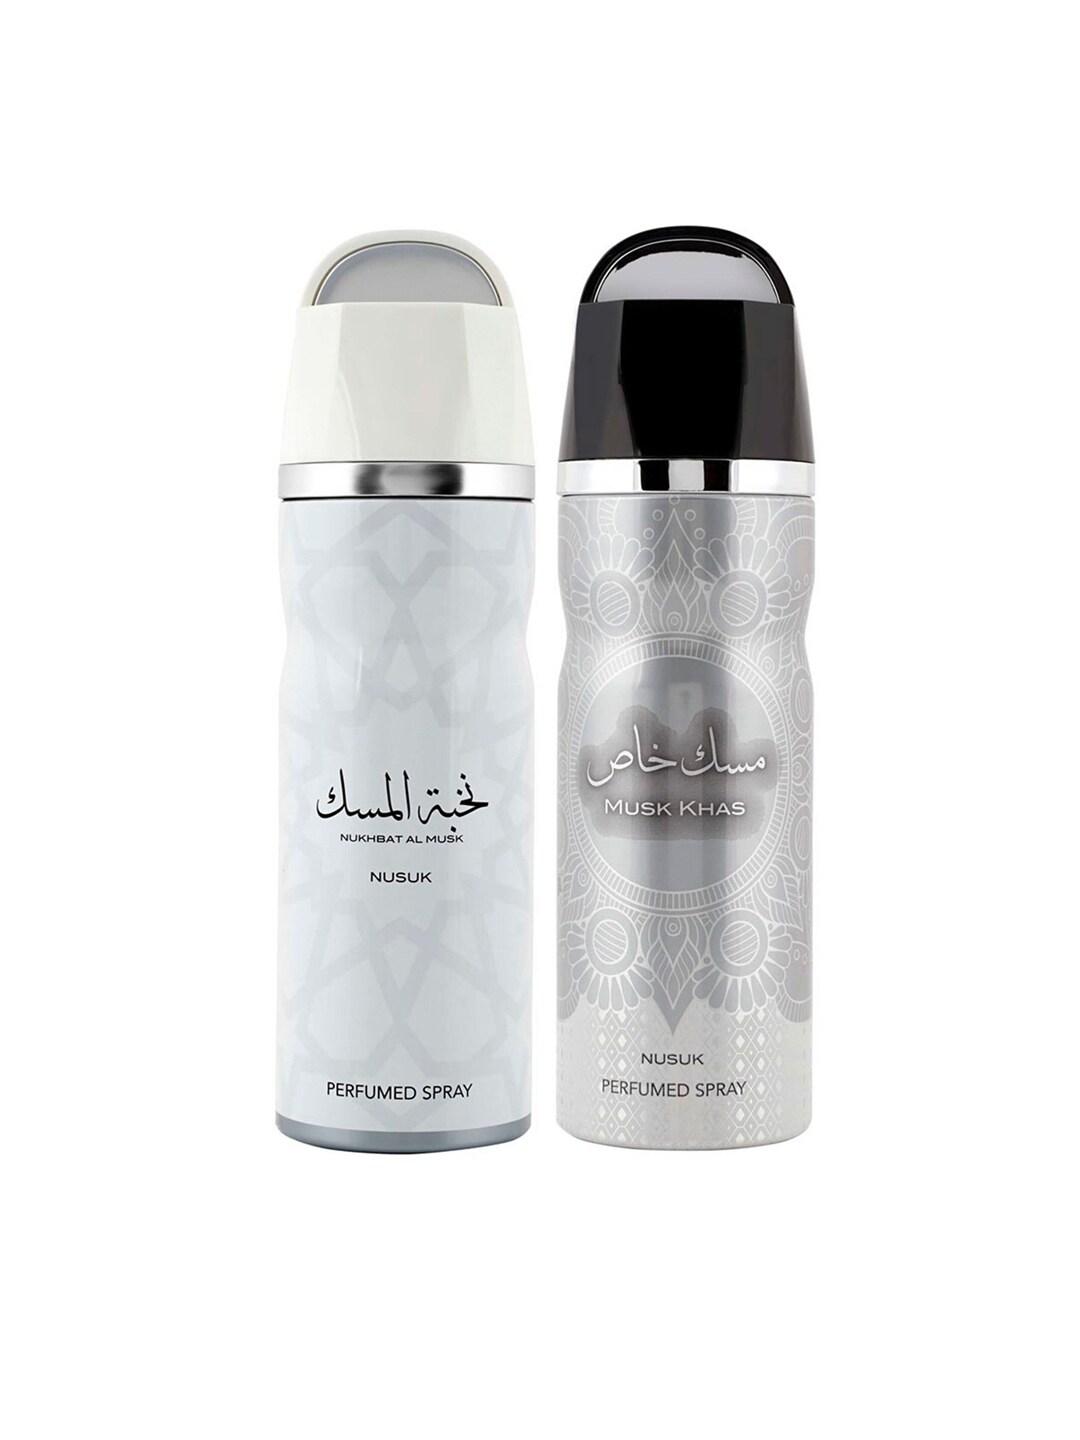 NUSUK Set of 2 Long Lasting Deodorants 200 ml Each - Nukhbat Al Musk & Musk Khas